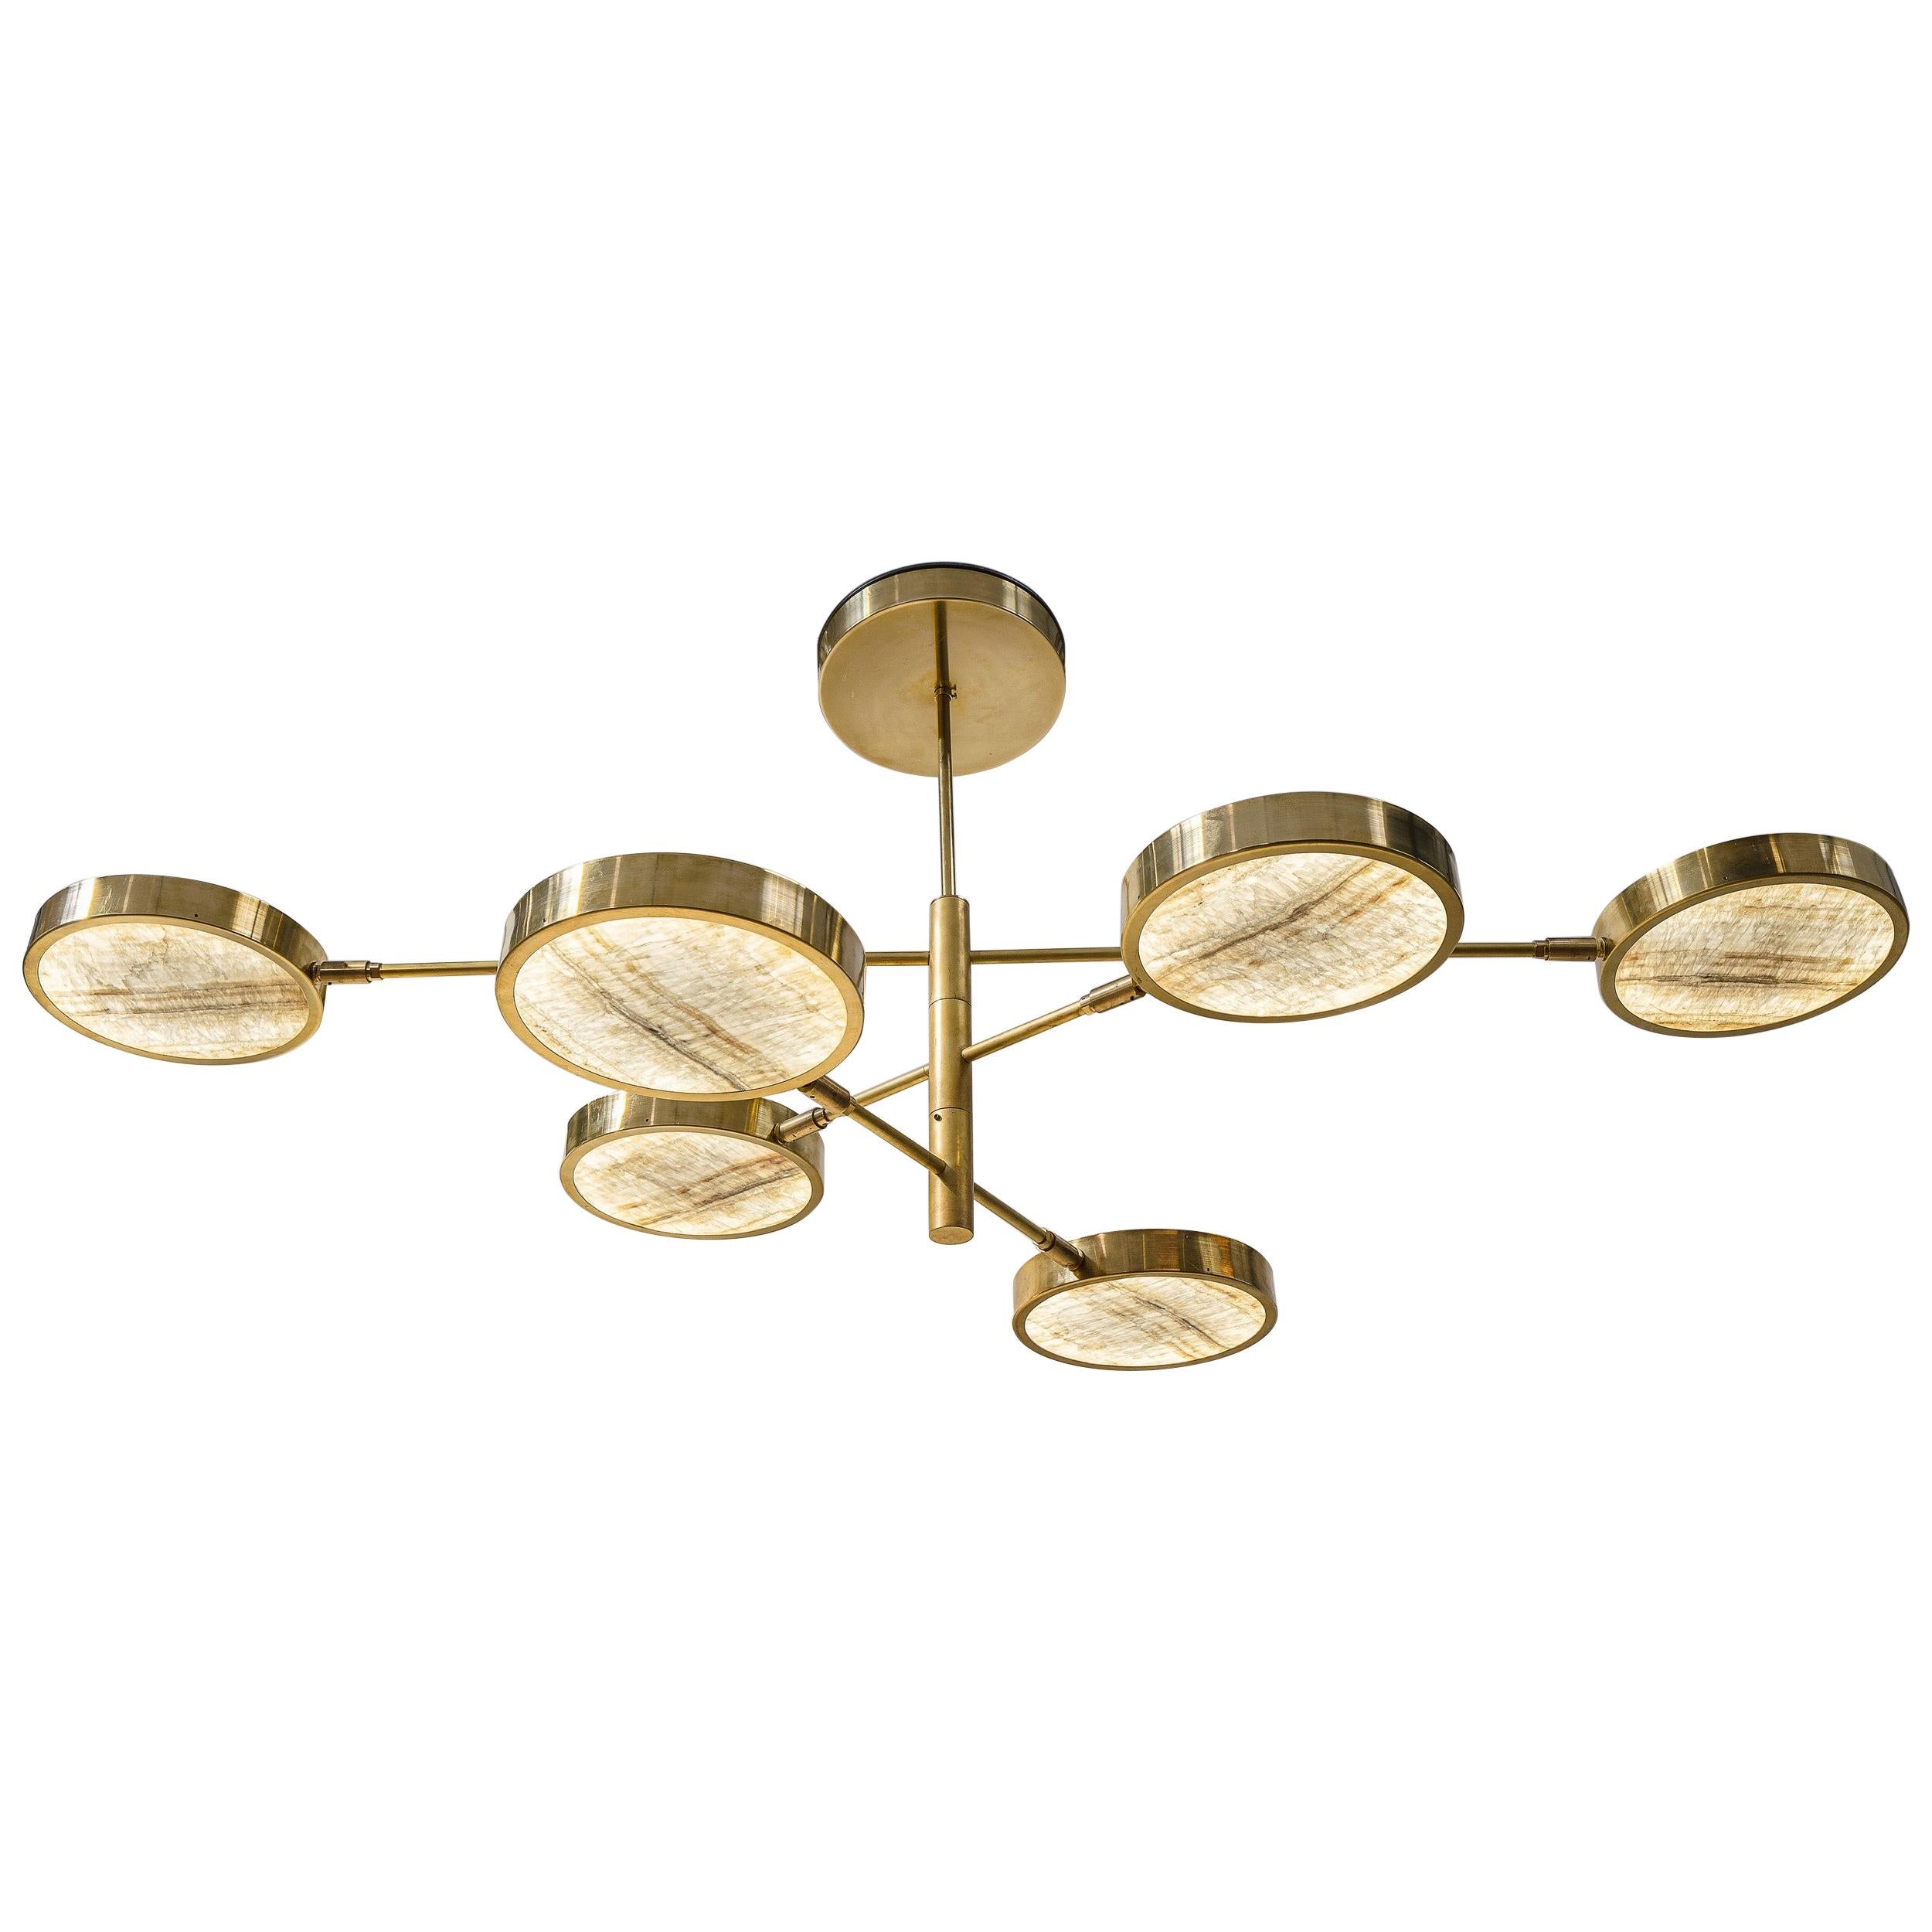 Sistema Solare Chandelier, Piattelli Design, Ivory-toned Onyx and Brass, 6-shade